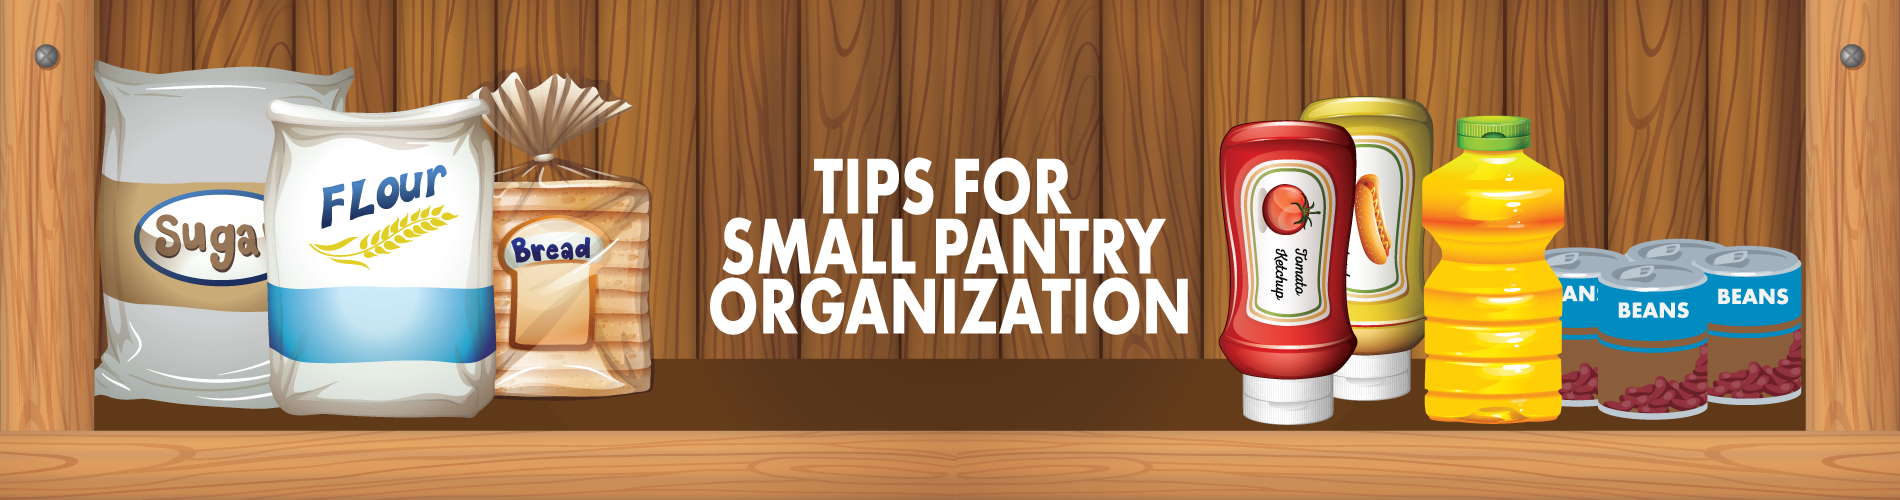 Small Pantry Organization graphic